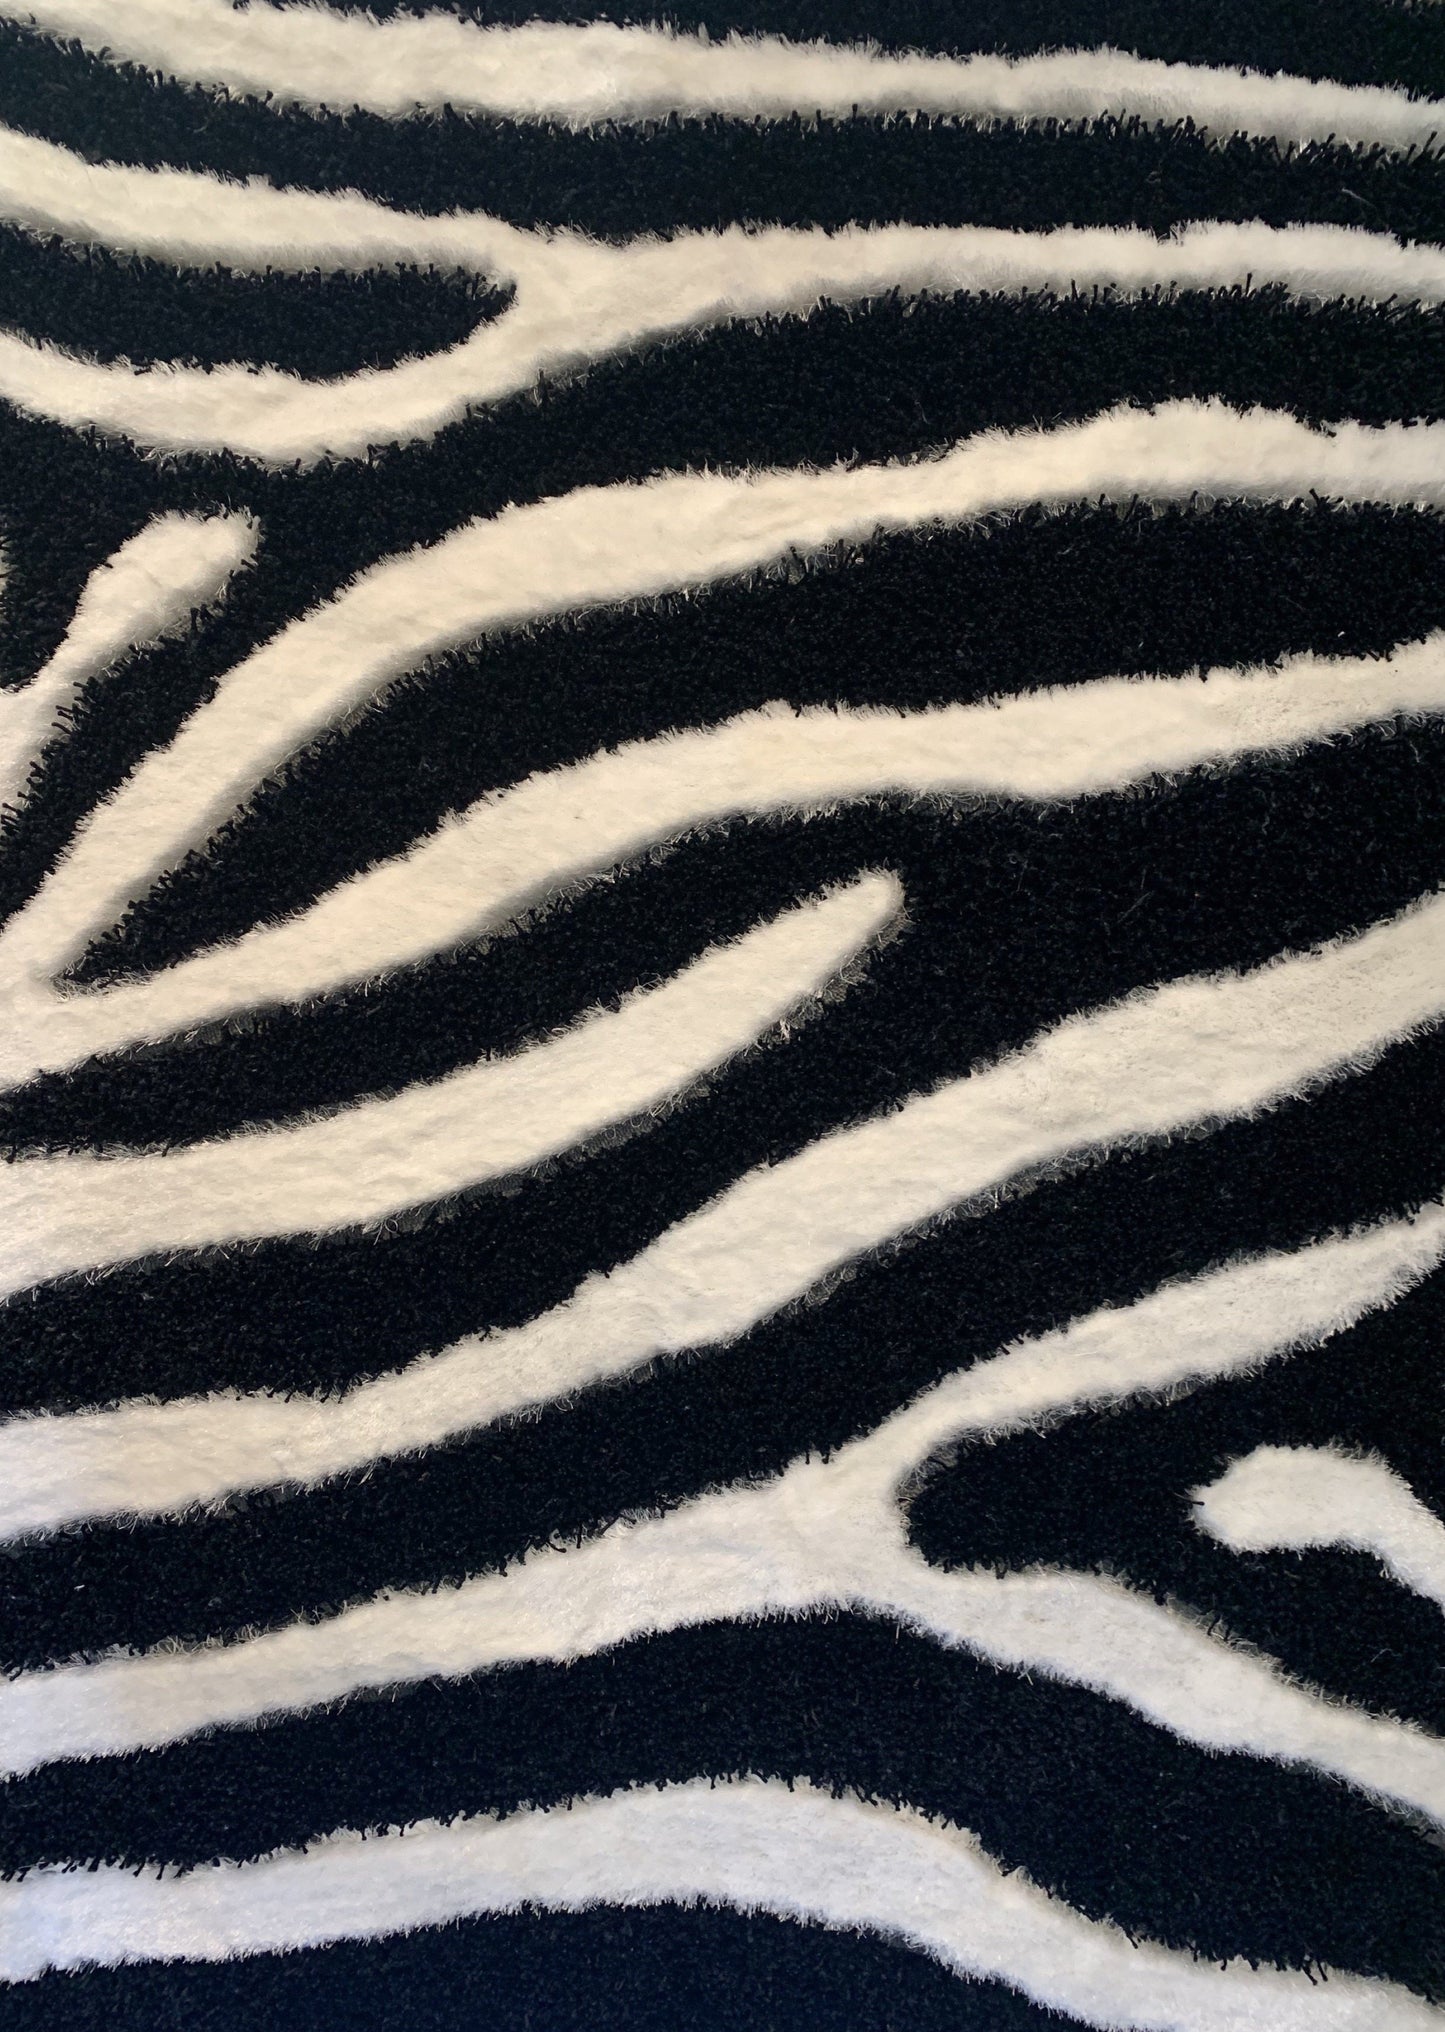 Zebra Animal Print Black & White Shag Long Pile Area Rug/Carpet